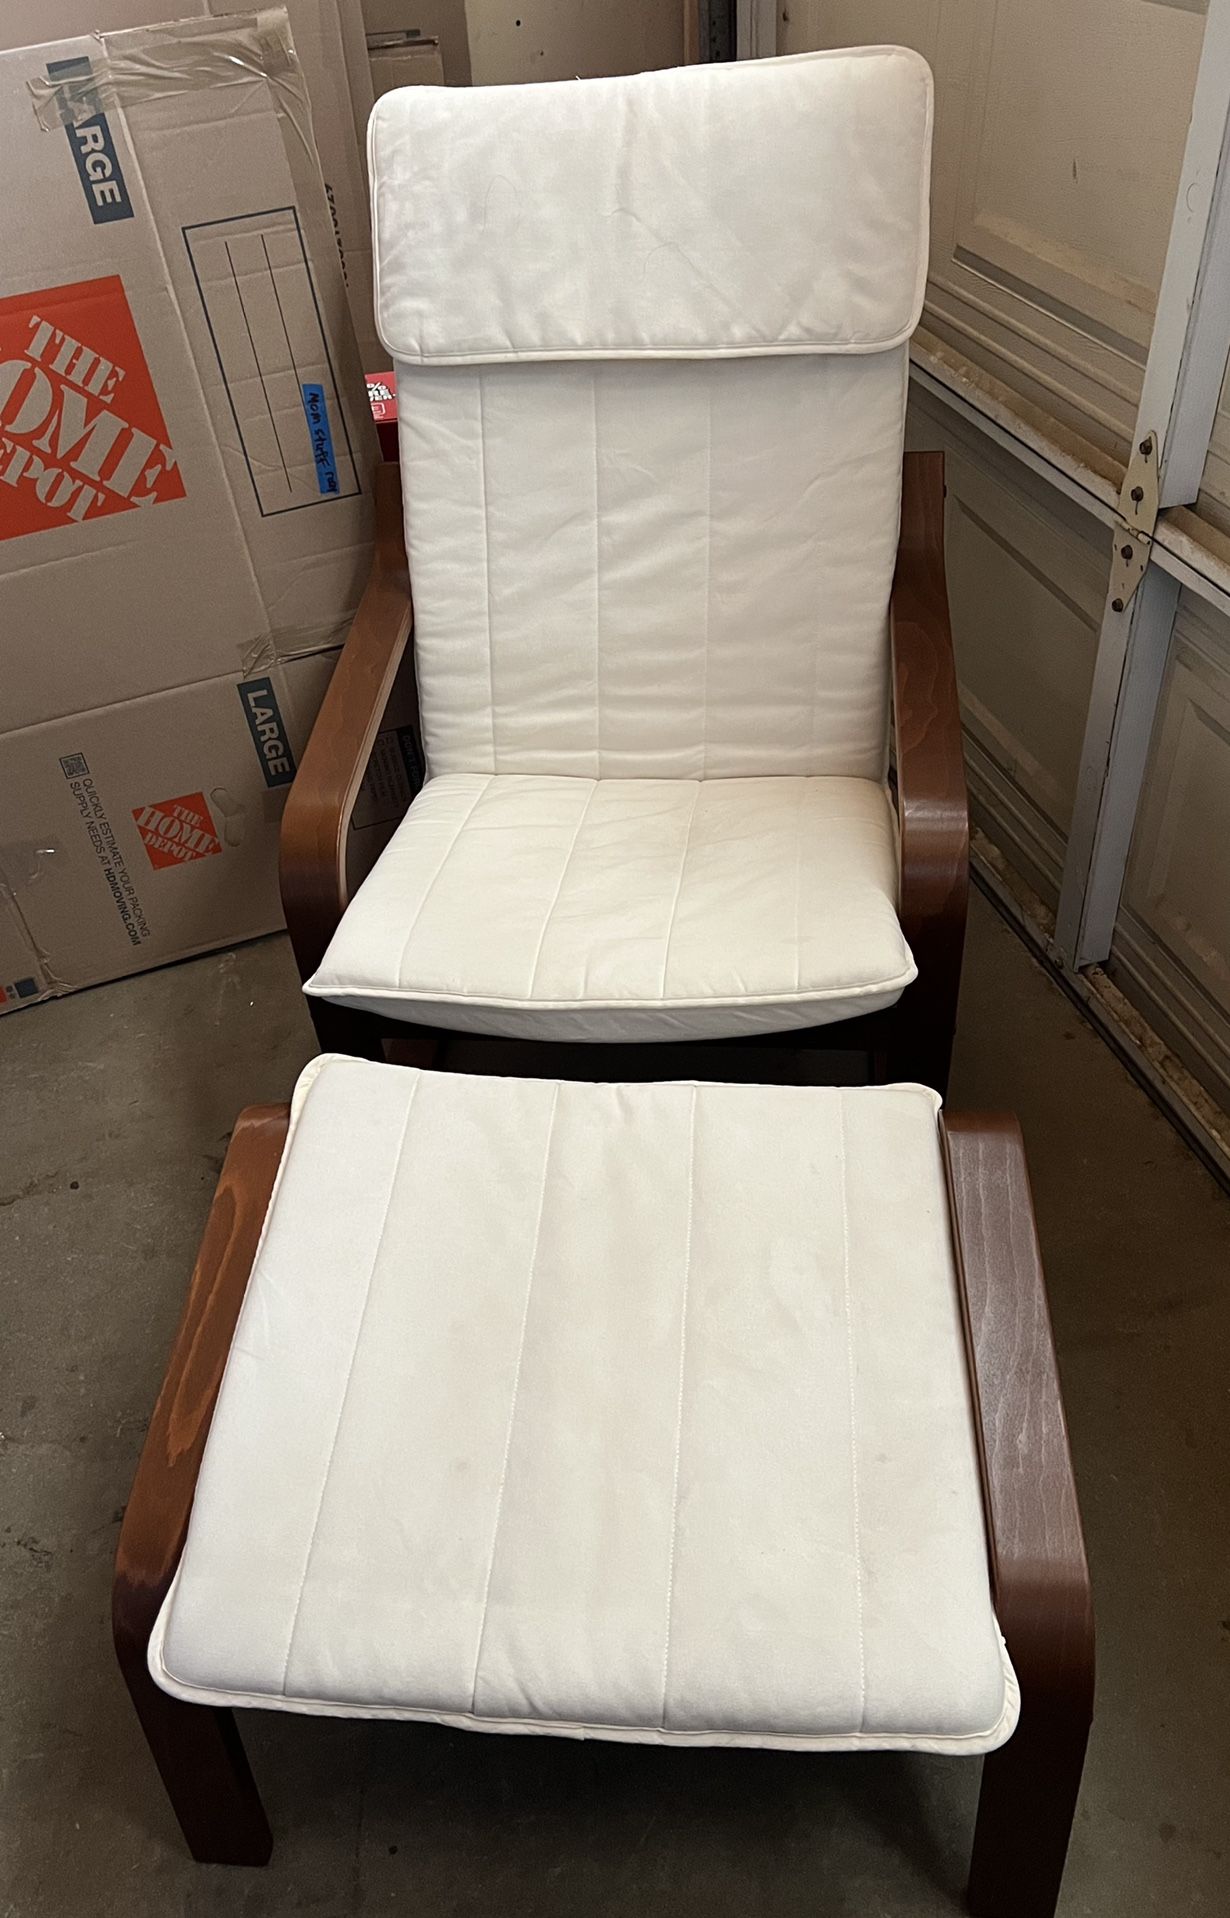 Ikea Chair & Ottoman 